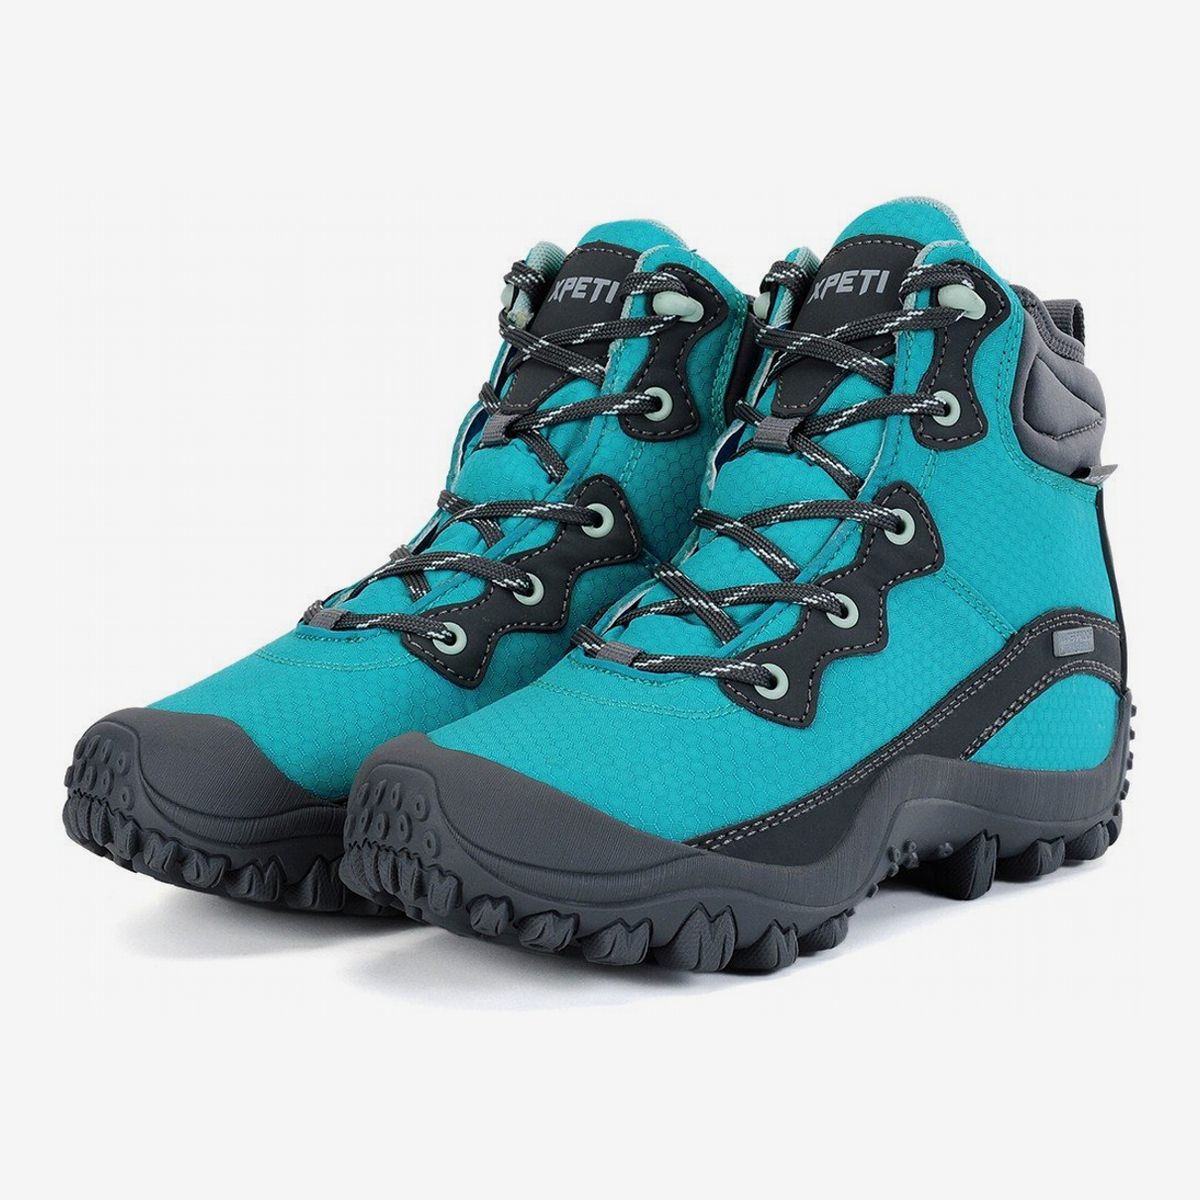 womens light waterproof hiking boots